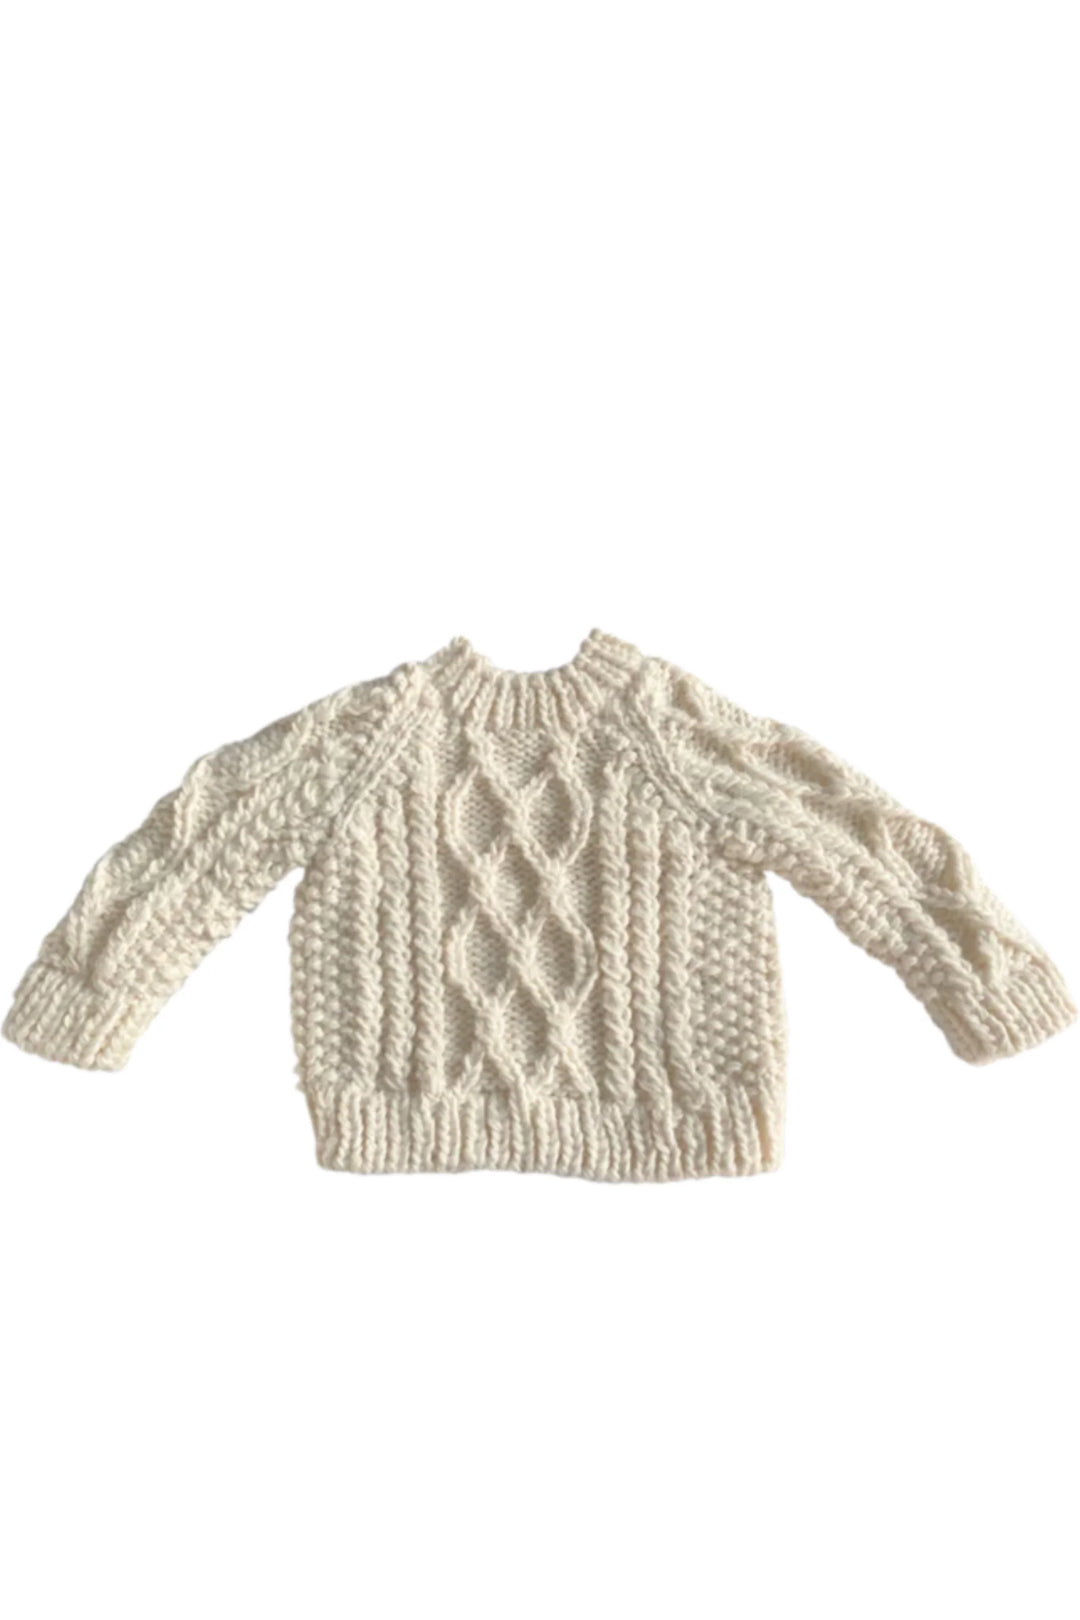 Blueberry Hill Cream Fisherman Knit Sweater